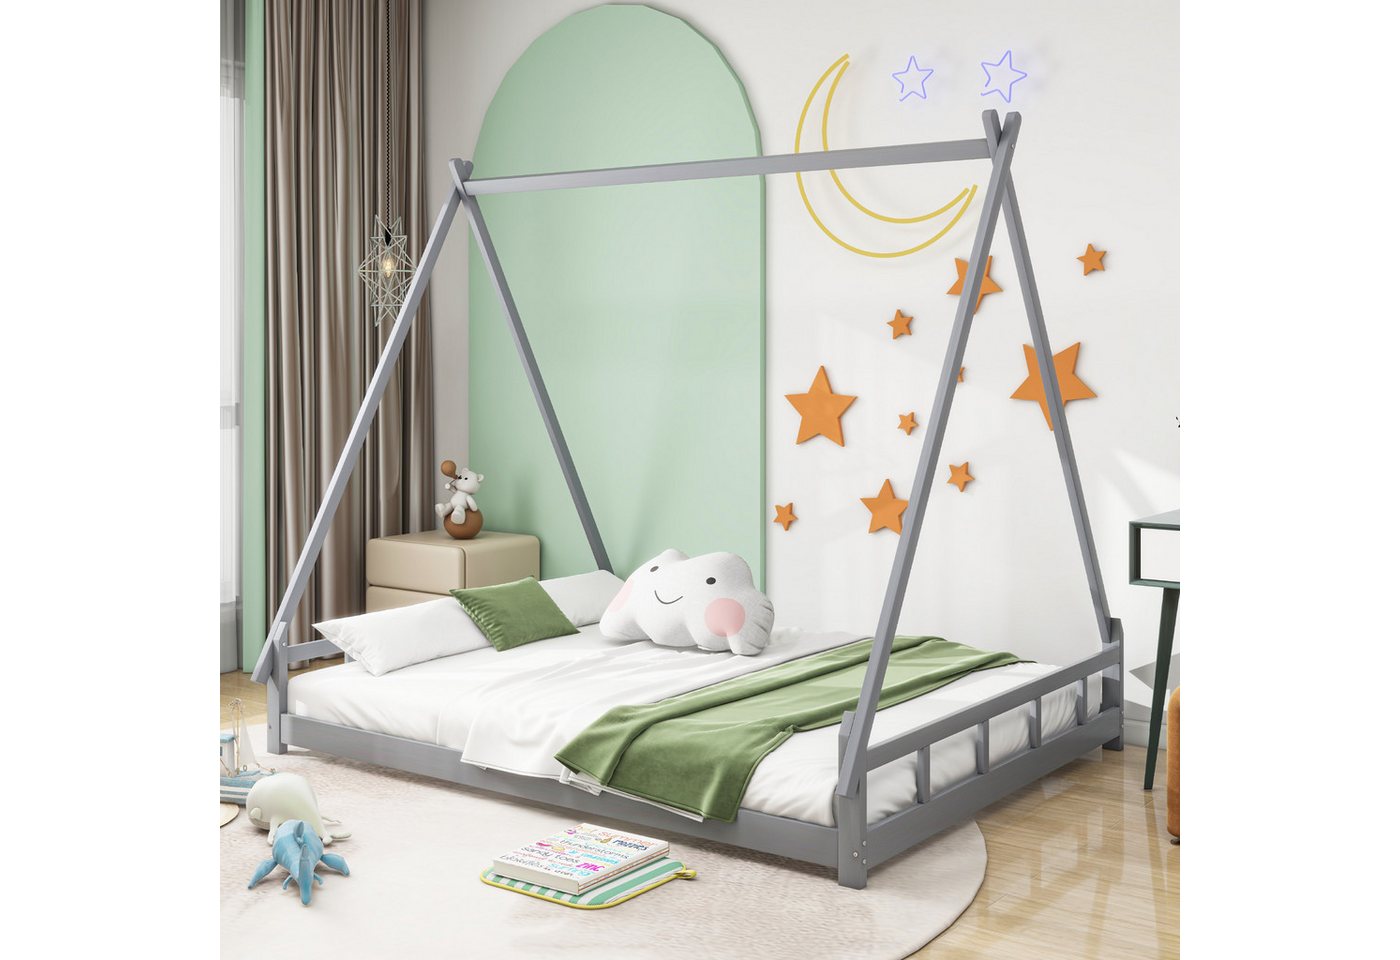 Flieks Kinderbett, Massivholzbett Jugendbett 140x200cm mit Zelt Design von Flieks